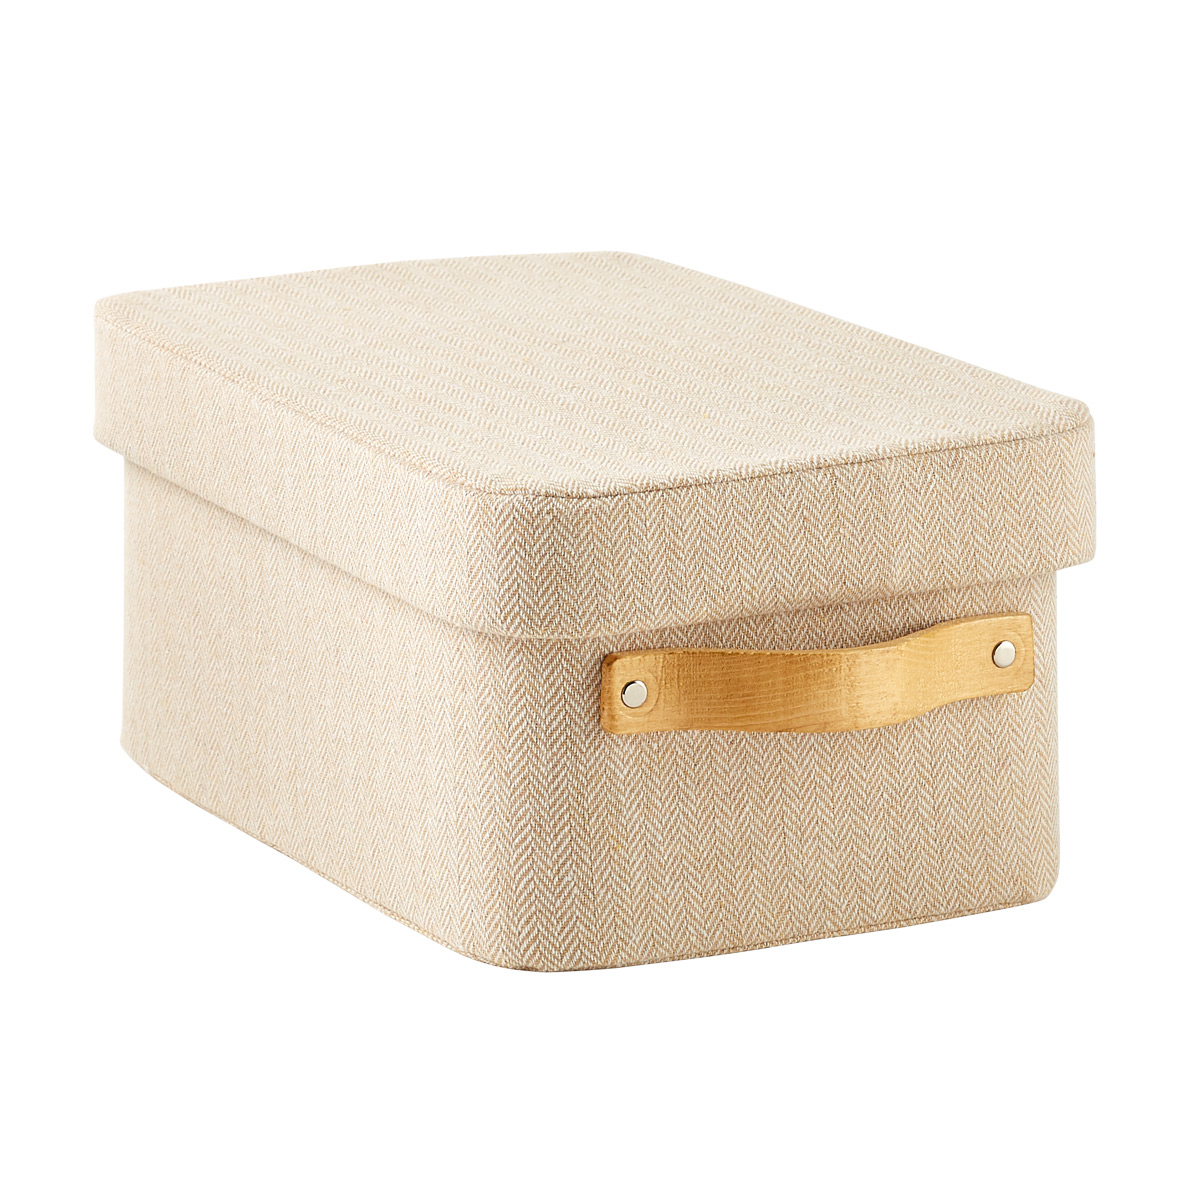 Medium Herringbone Box w/ Wooden Handles Natural | The Container Store